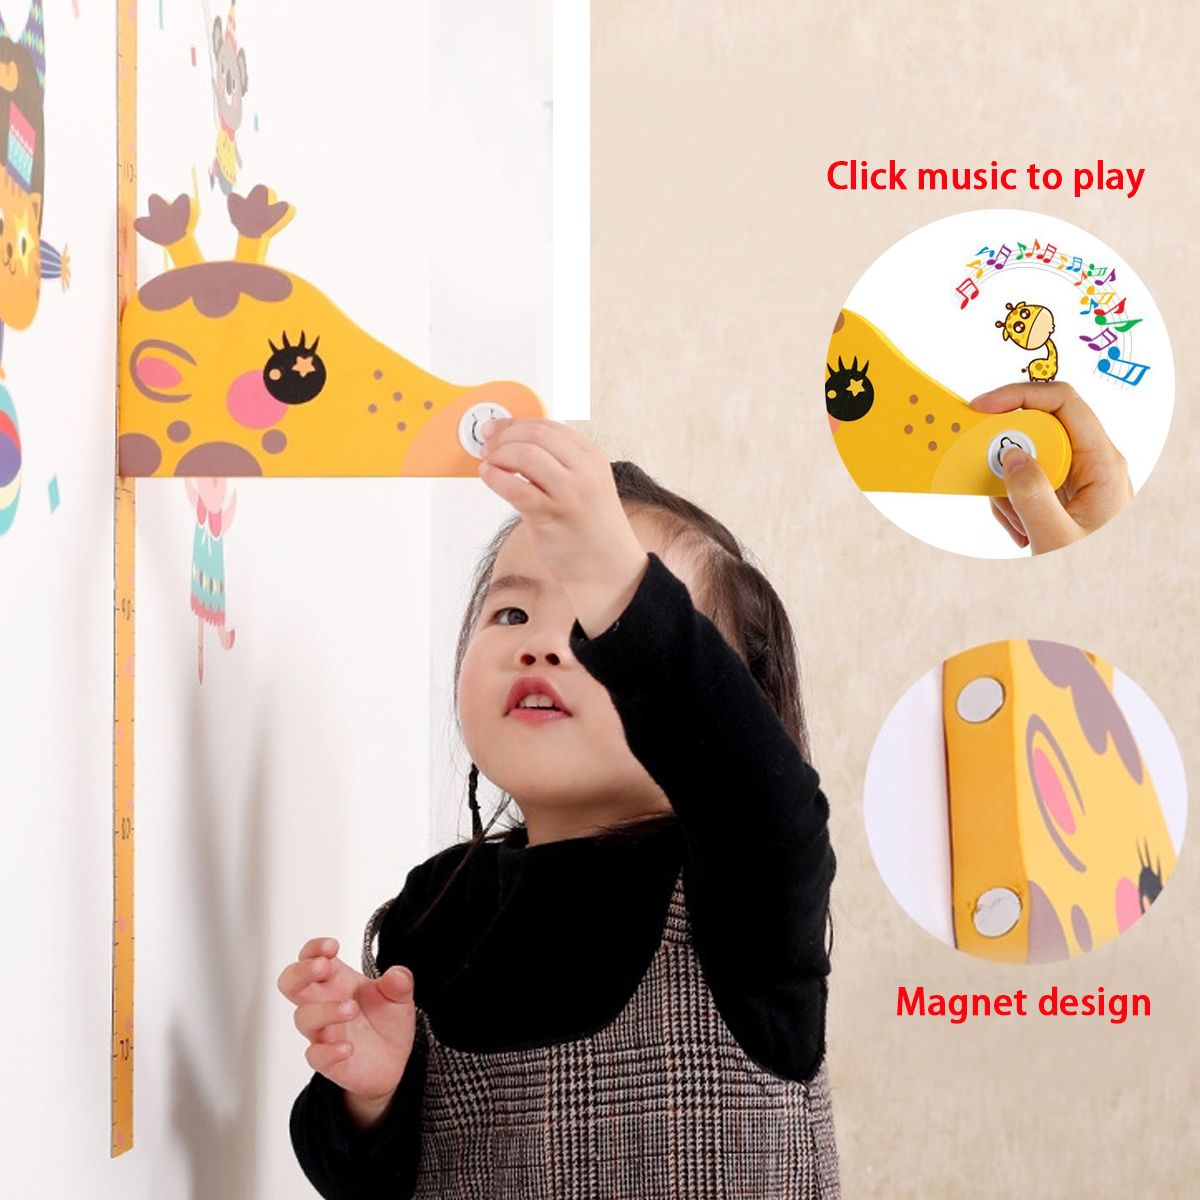 Height-Growth-Chart-Measure-Ruler-Wall-Sticker-Kids-Room-Decor-DIY-Giraffe-Elephant-1604686